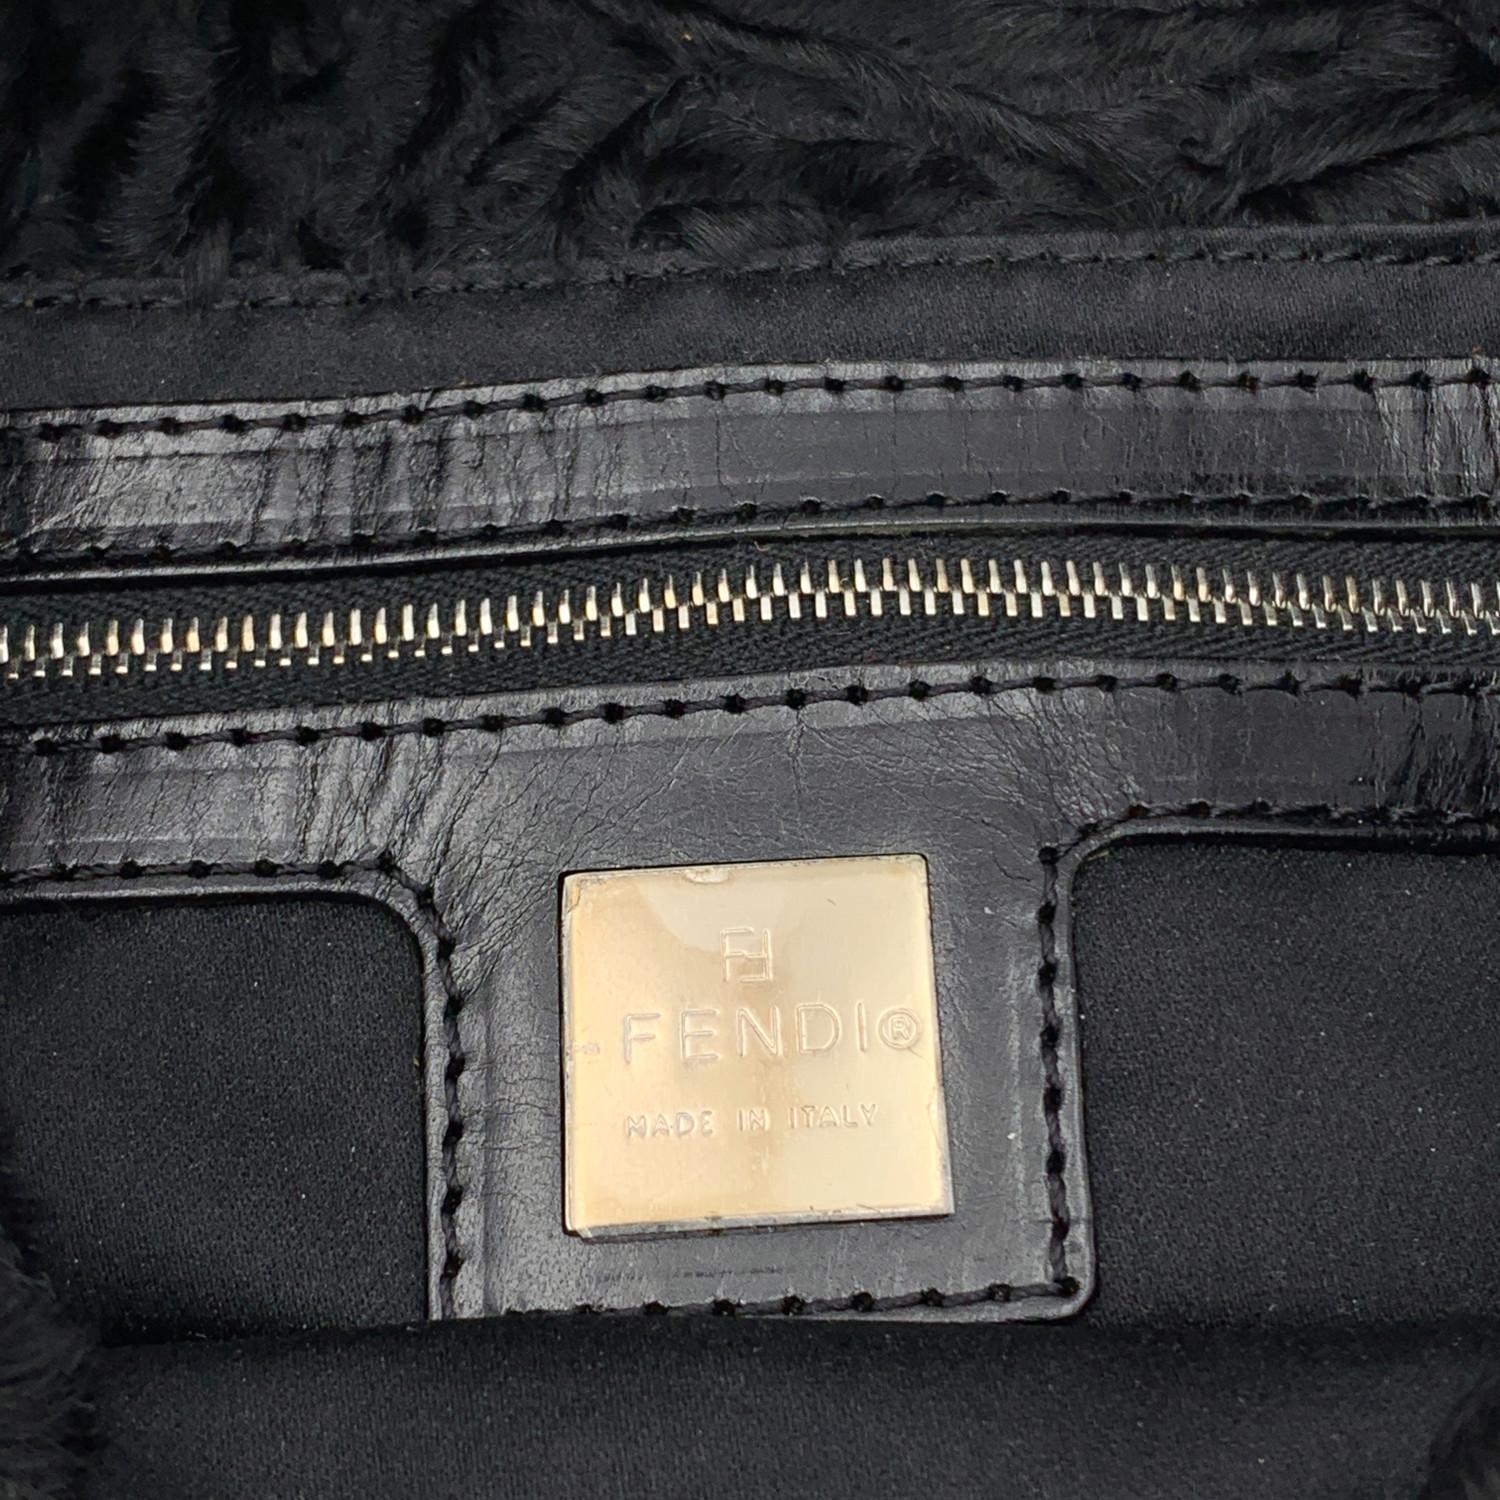 Fendi Black Lamb Fur and Leather Baguette Shoulder Bag Handbag 4